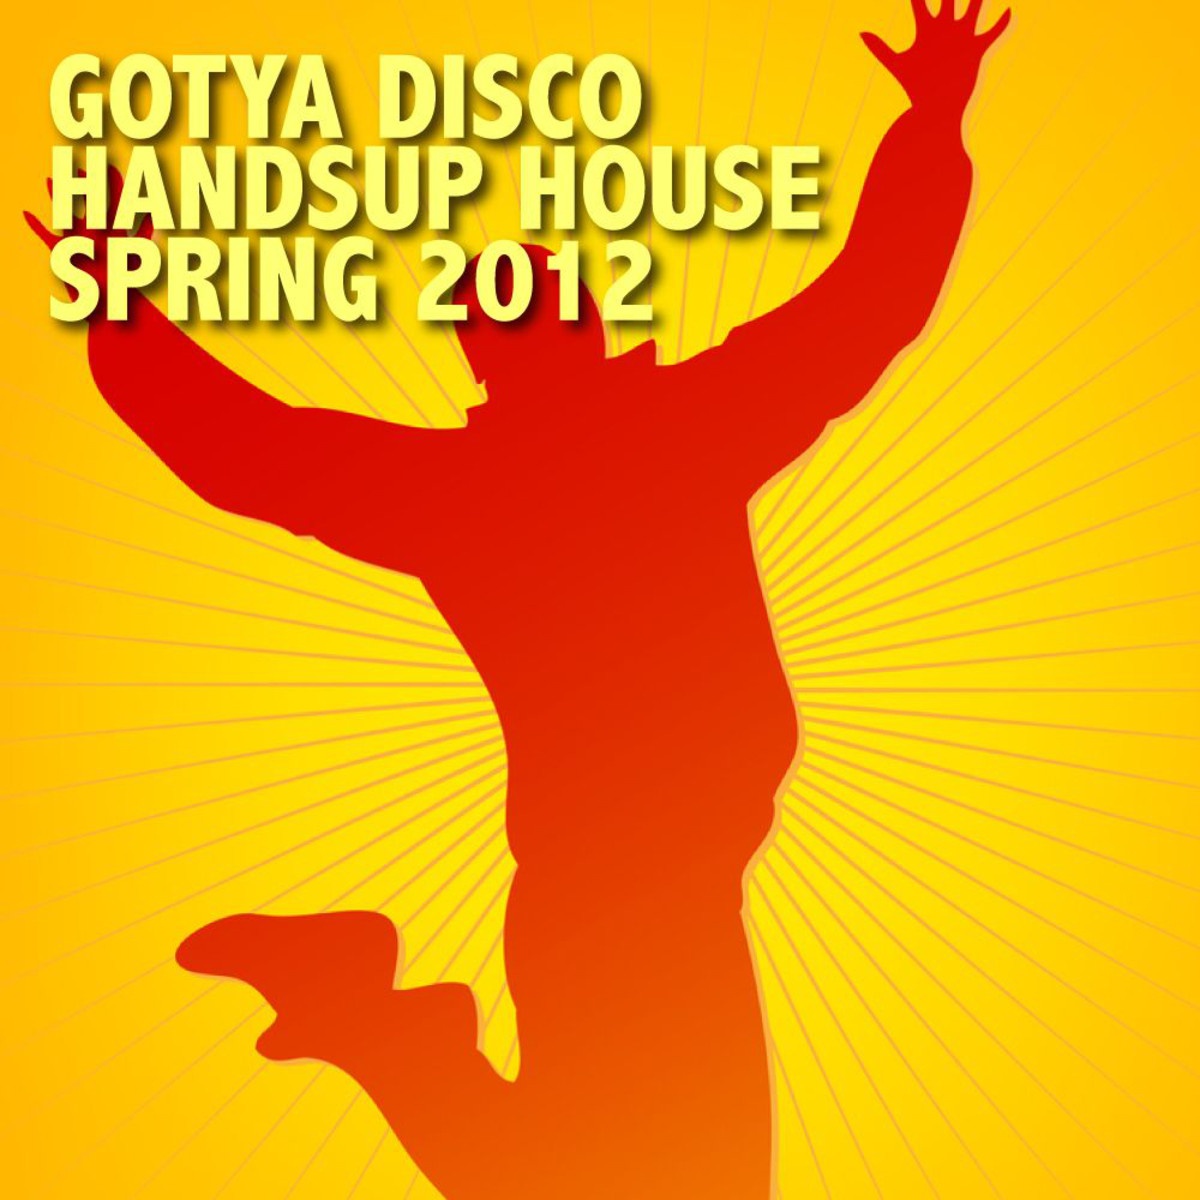 Gotya Disco Handsup House Spring 2012